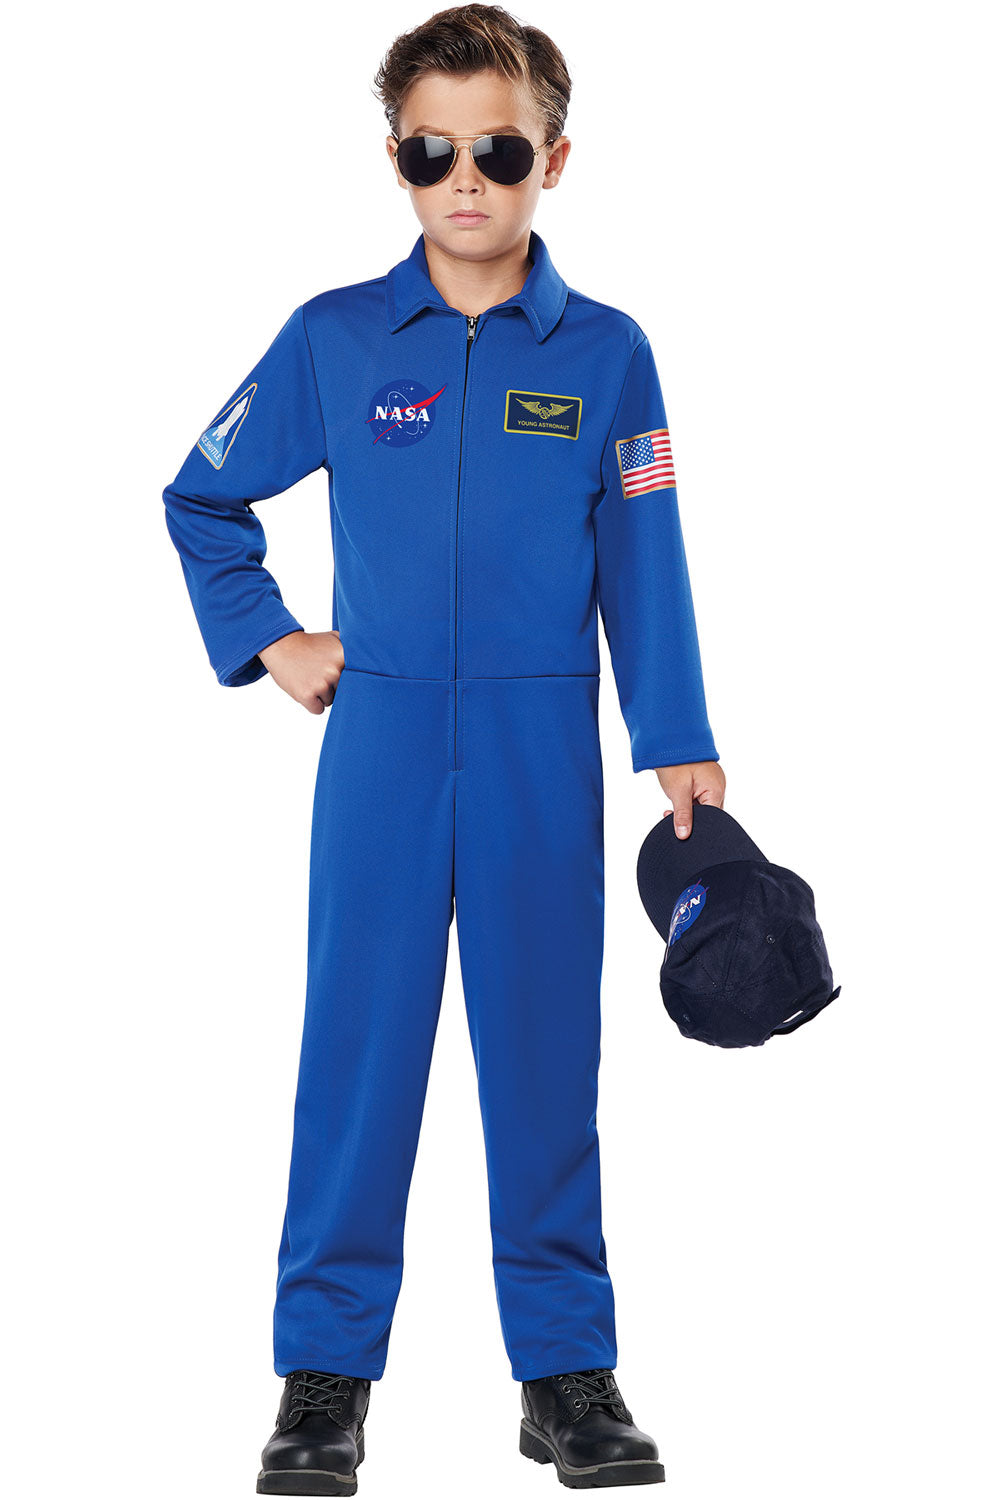 NASA JUMPSUIT/CHILD California Costume 00562